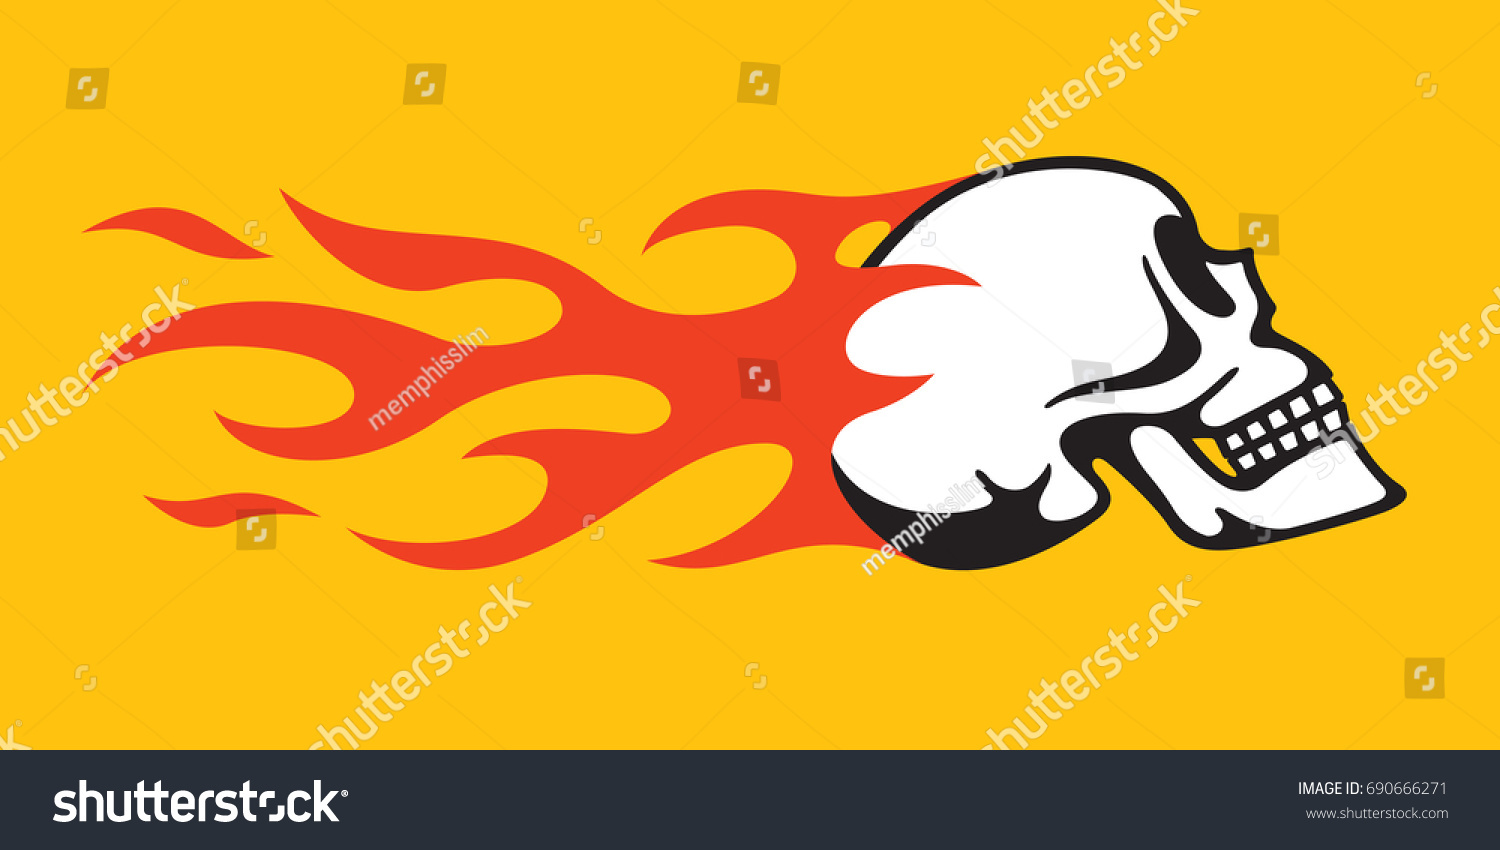 SVG of Flaming Skull Retro Hot Rod, Motorcycle Design
Vintage style vector illustration of speeding flaming skull from the side. svg